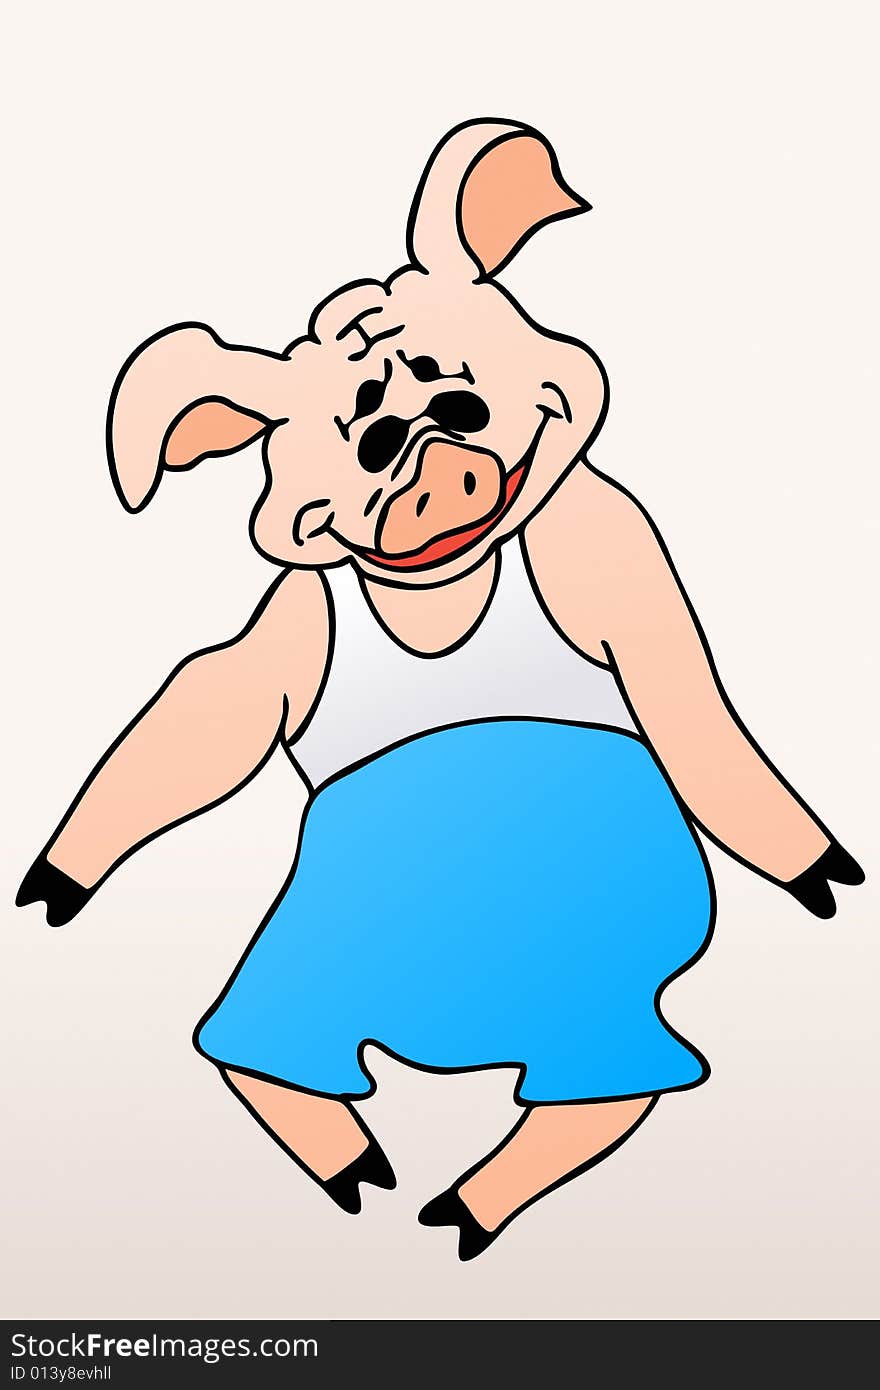 Vector illustration of The Hog